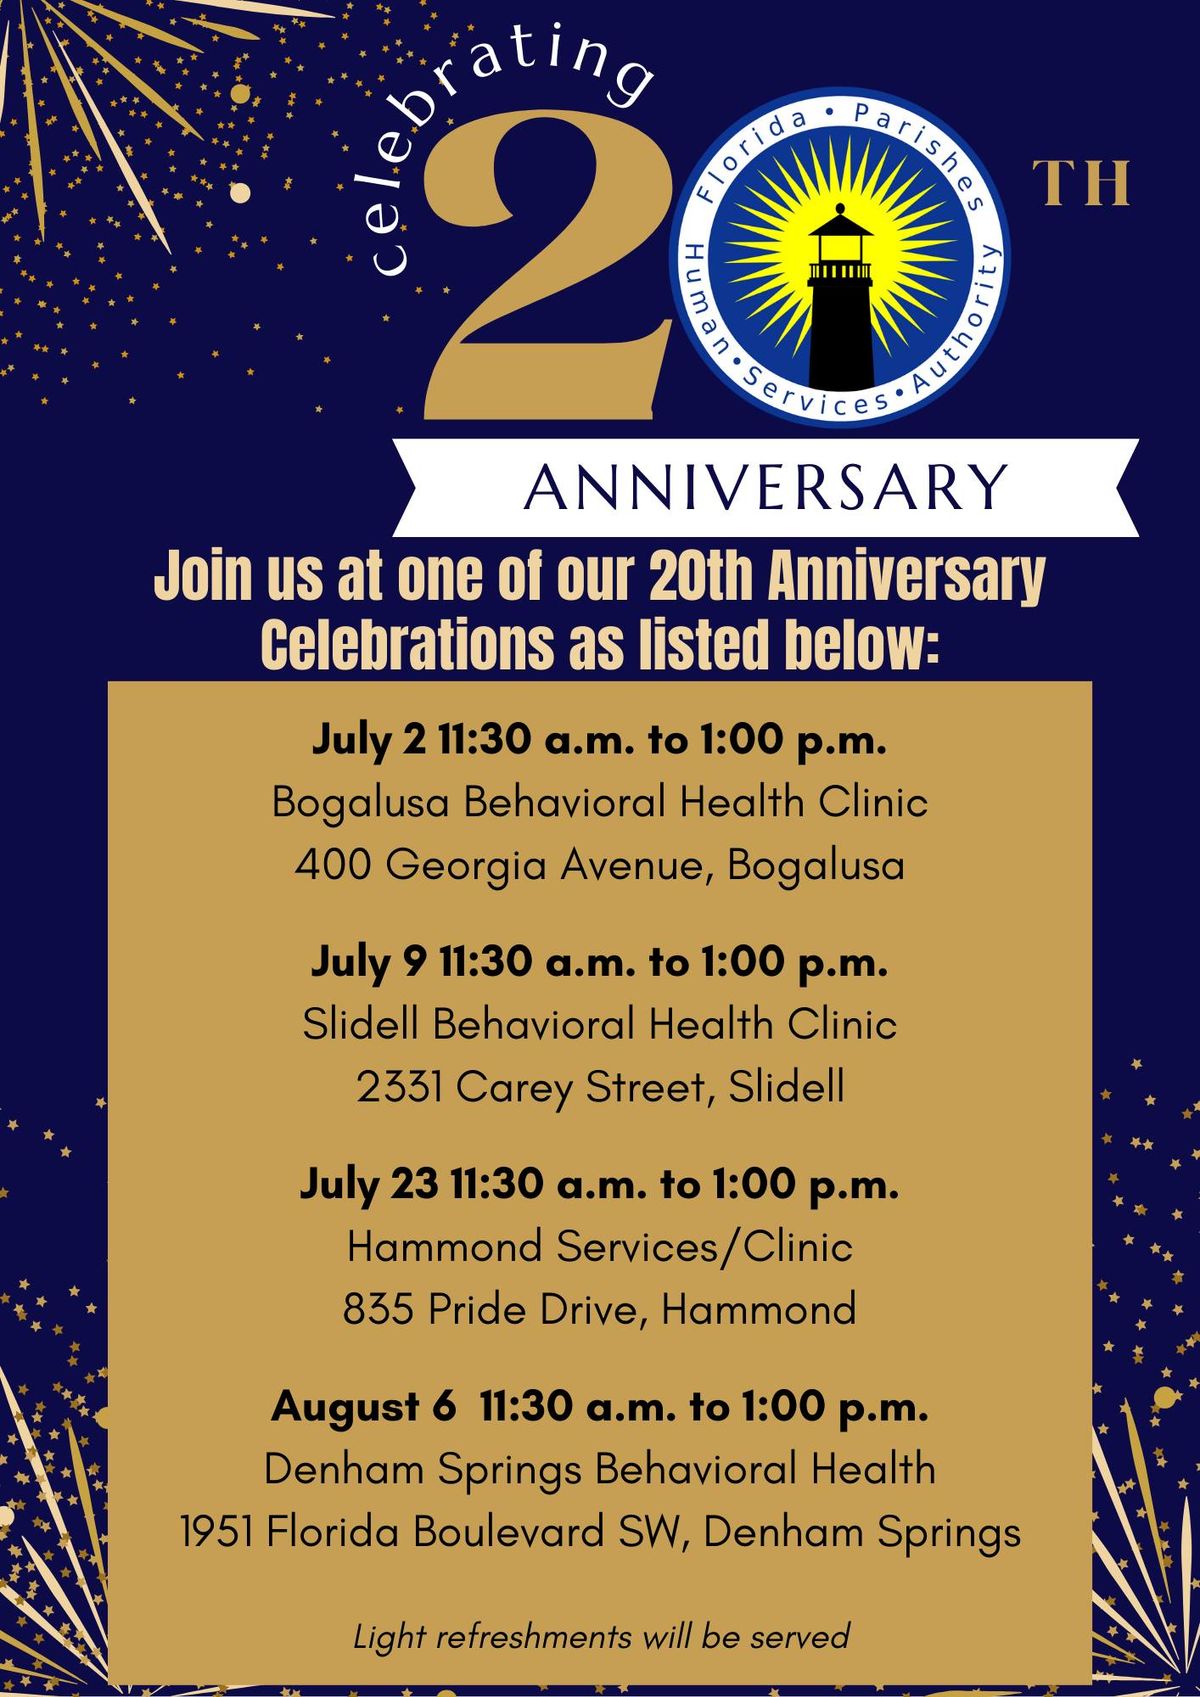 20th Anniversary Celebration- Slidell Behavioral Health Clinic